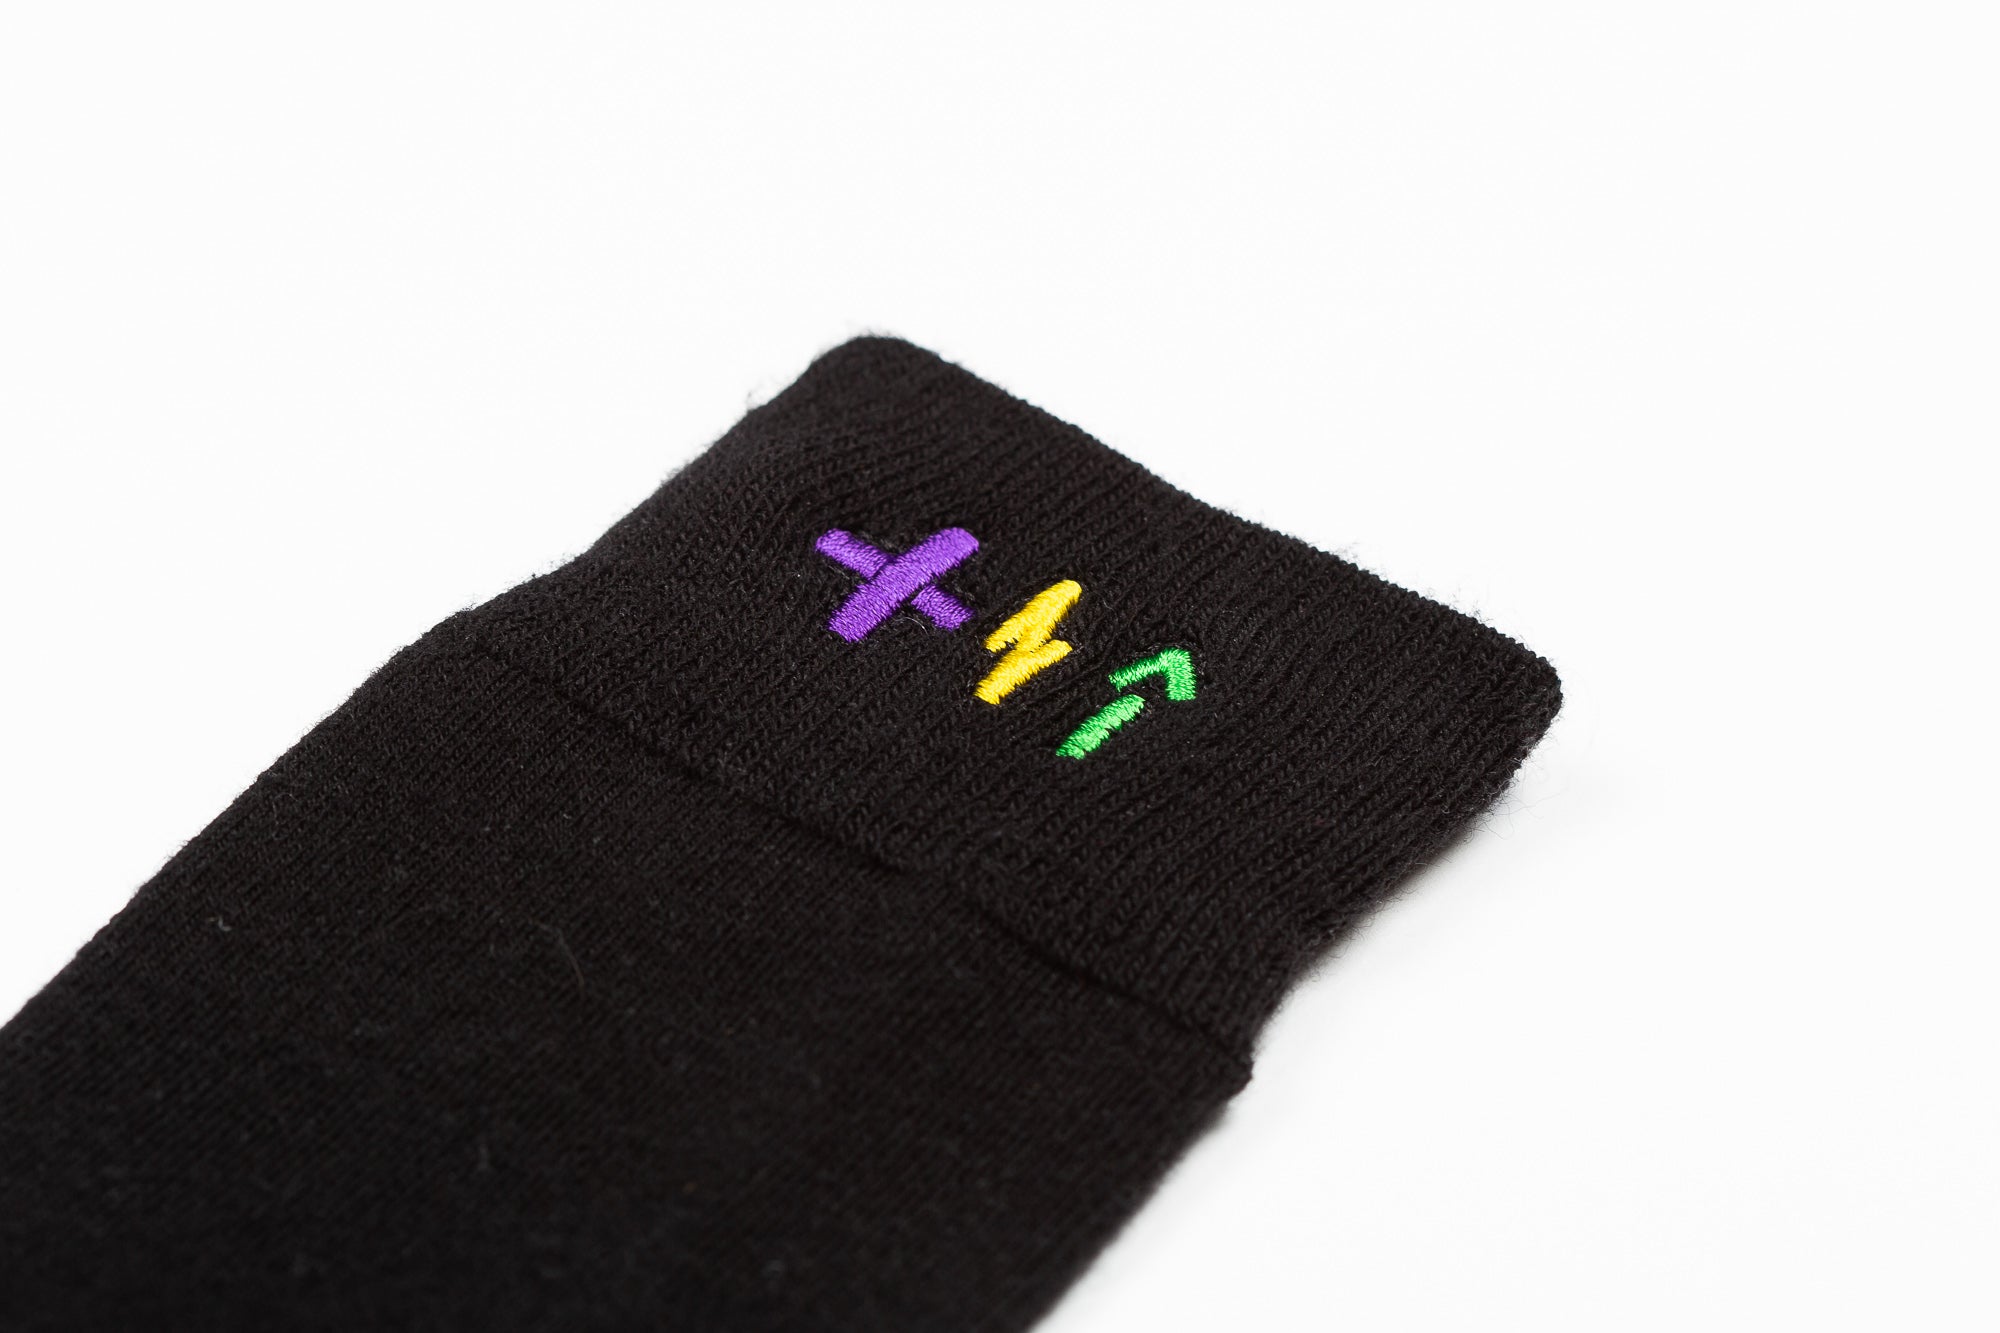 Custom sewn and embroidered socks